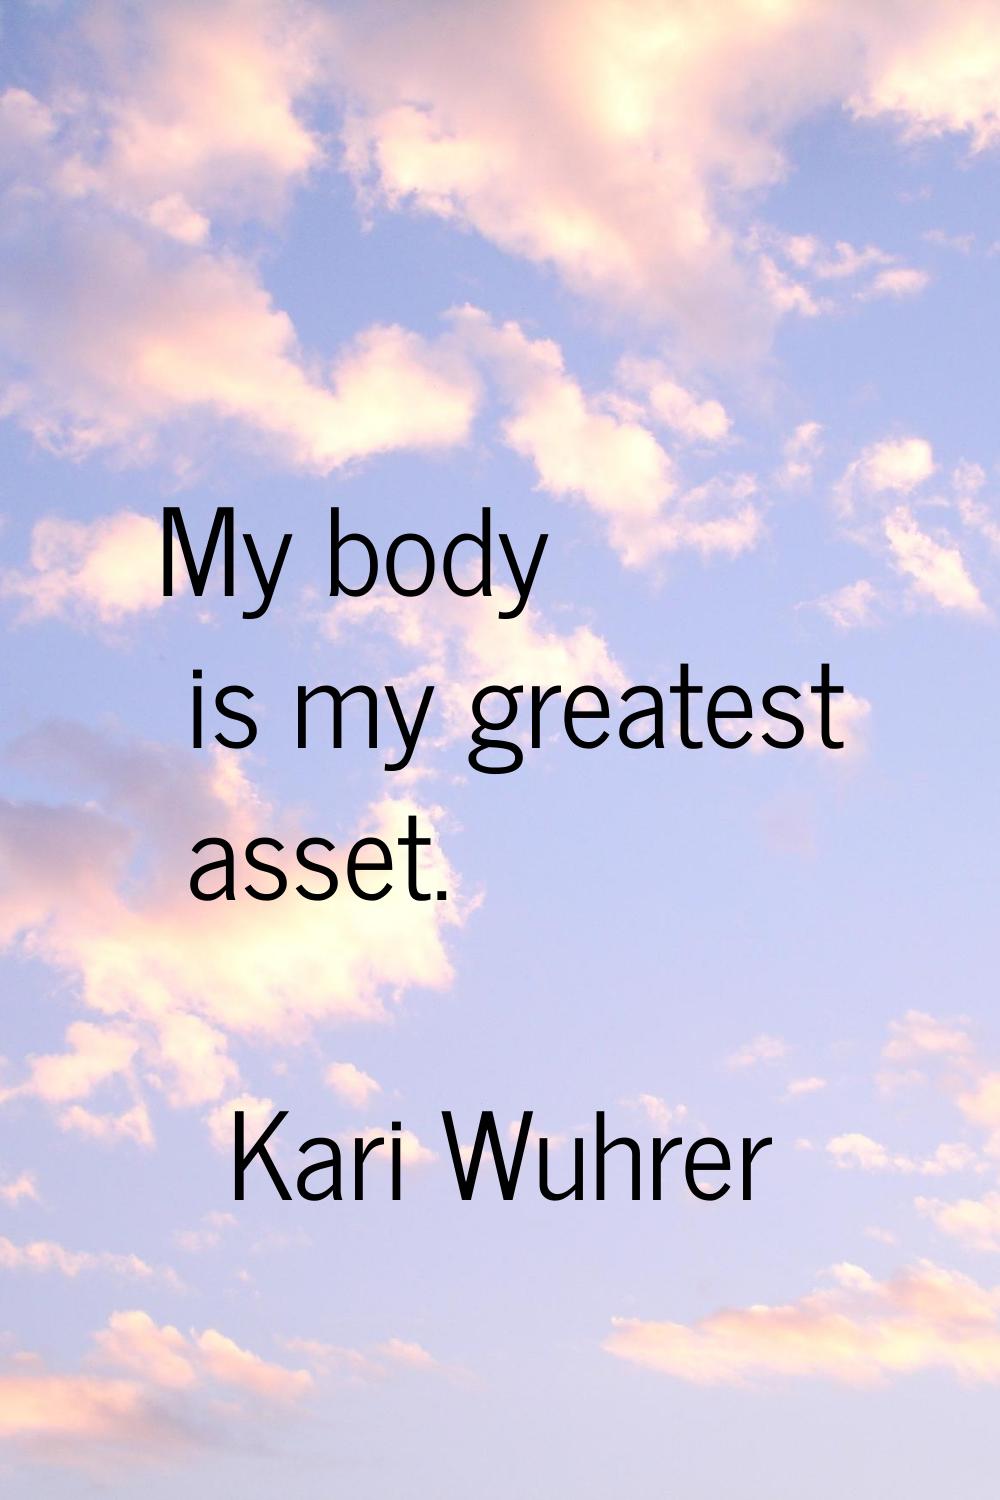 My body is my greatest asset.